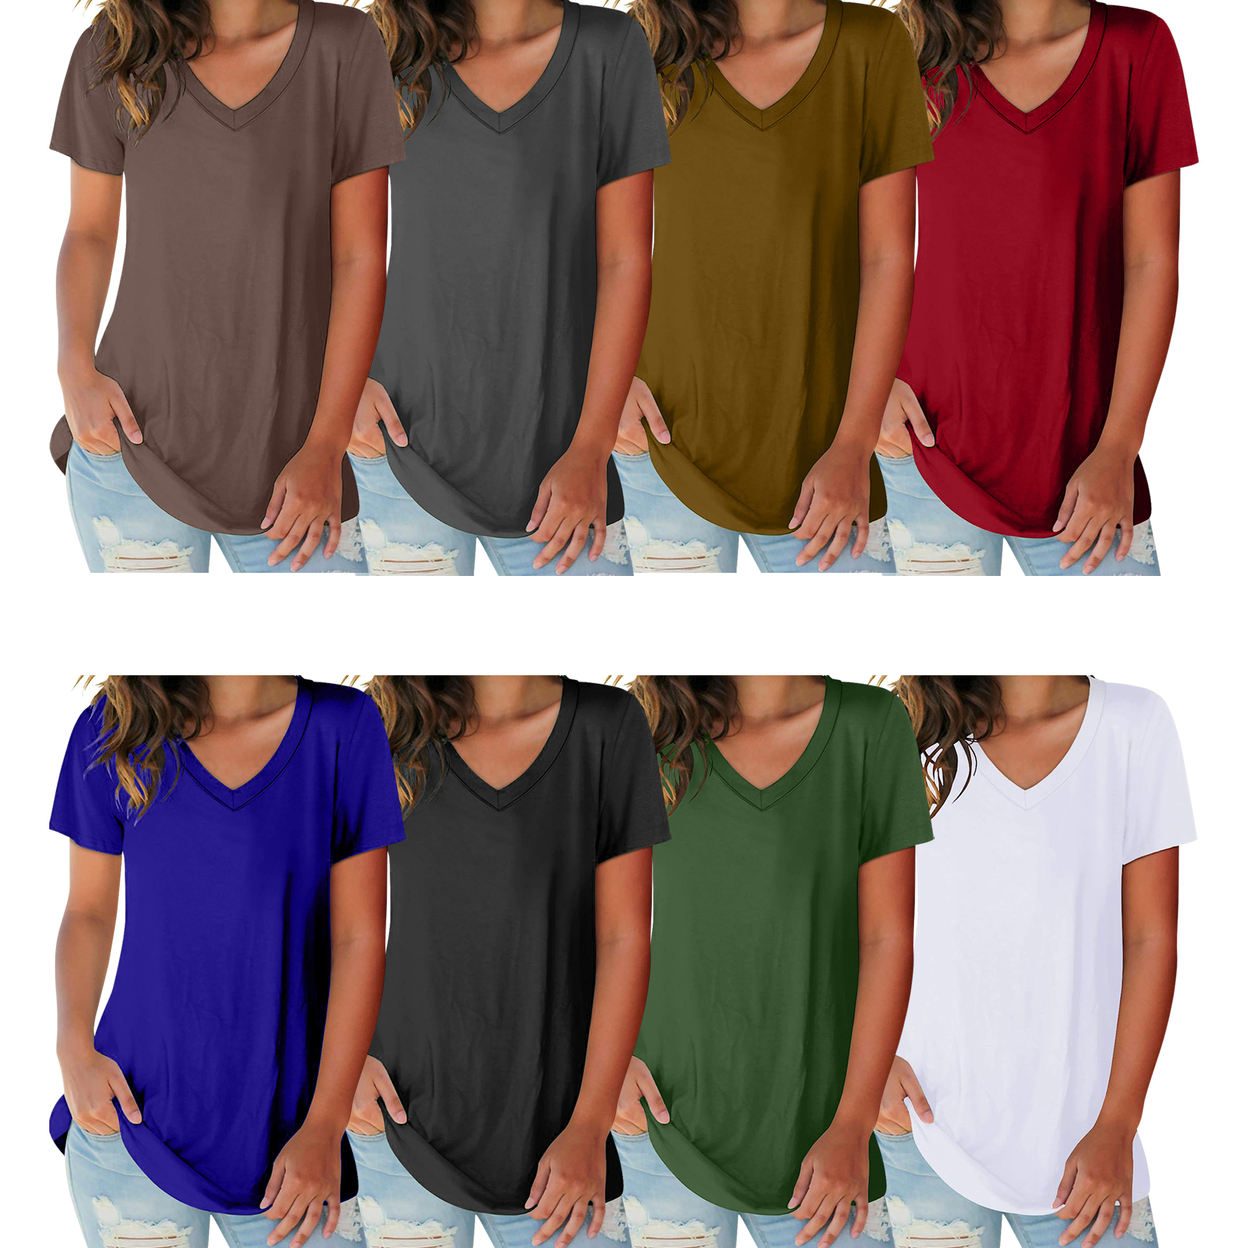 2-Pack: Women's Ultra Soft Smooth Cotton Blend Basic V-Neck Short Sleeve Shirts - White & Mustard, Large